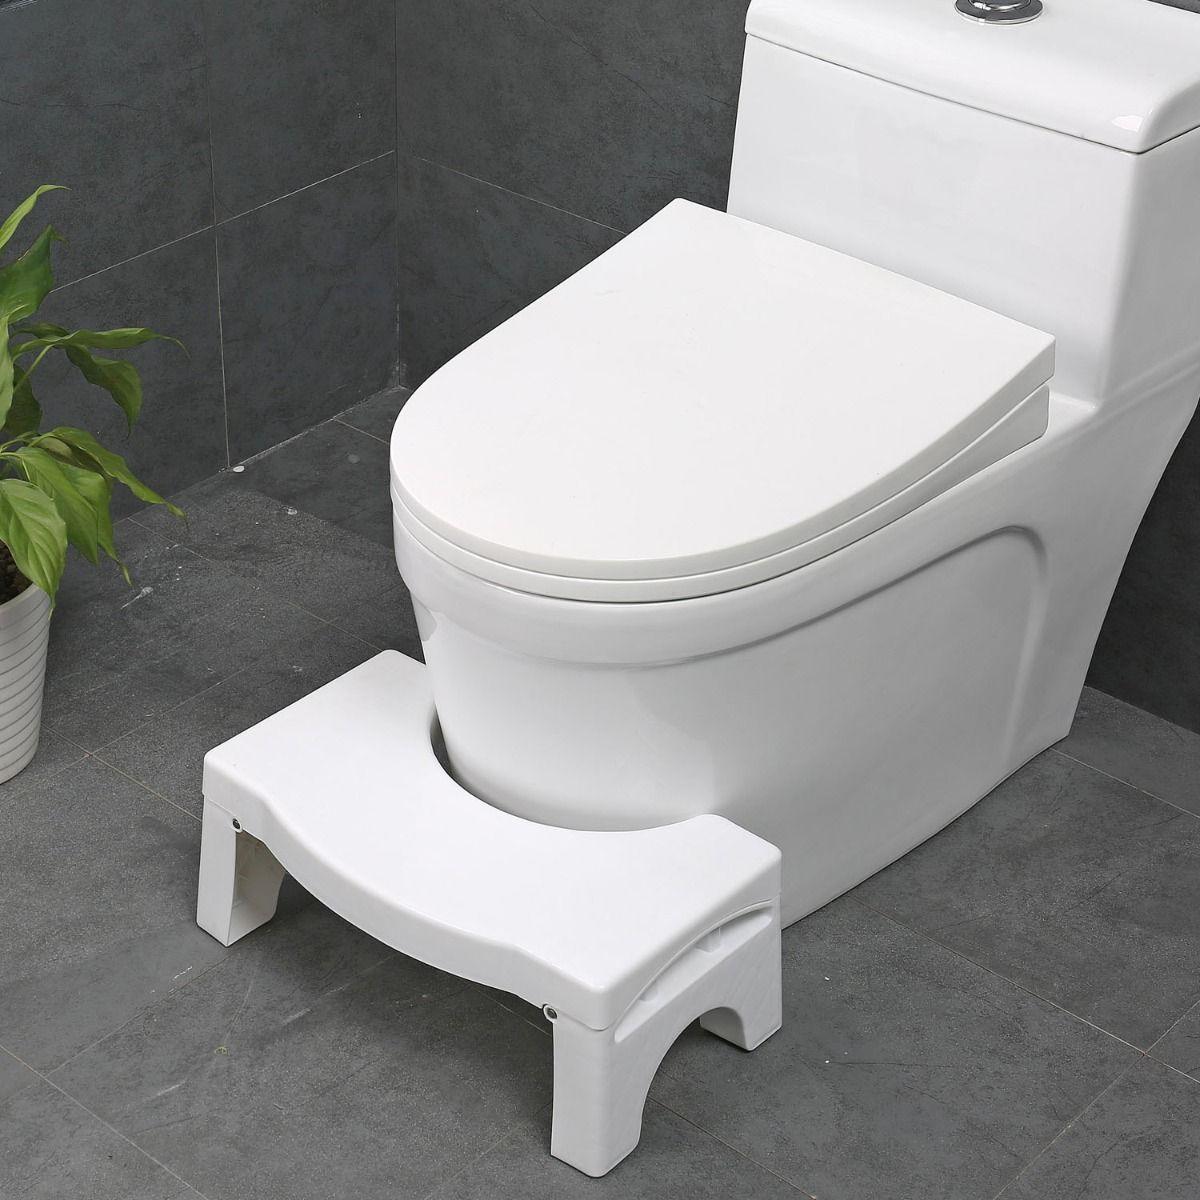 White Folding Toilet Stool Step Bathroom Aid Adult Children